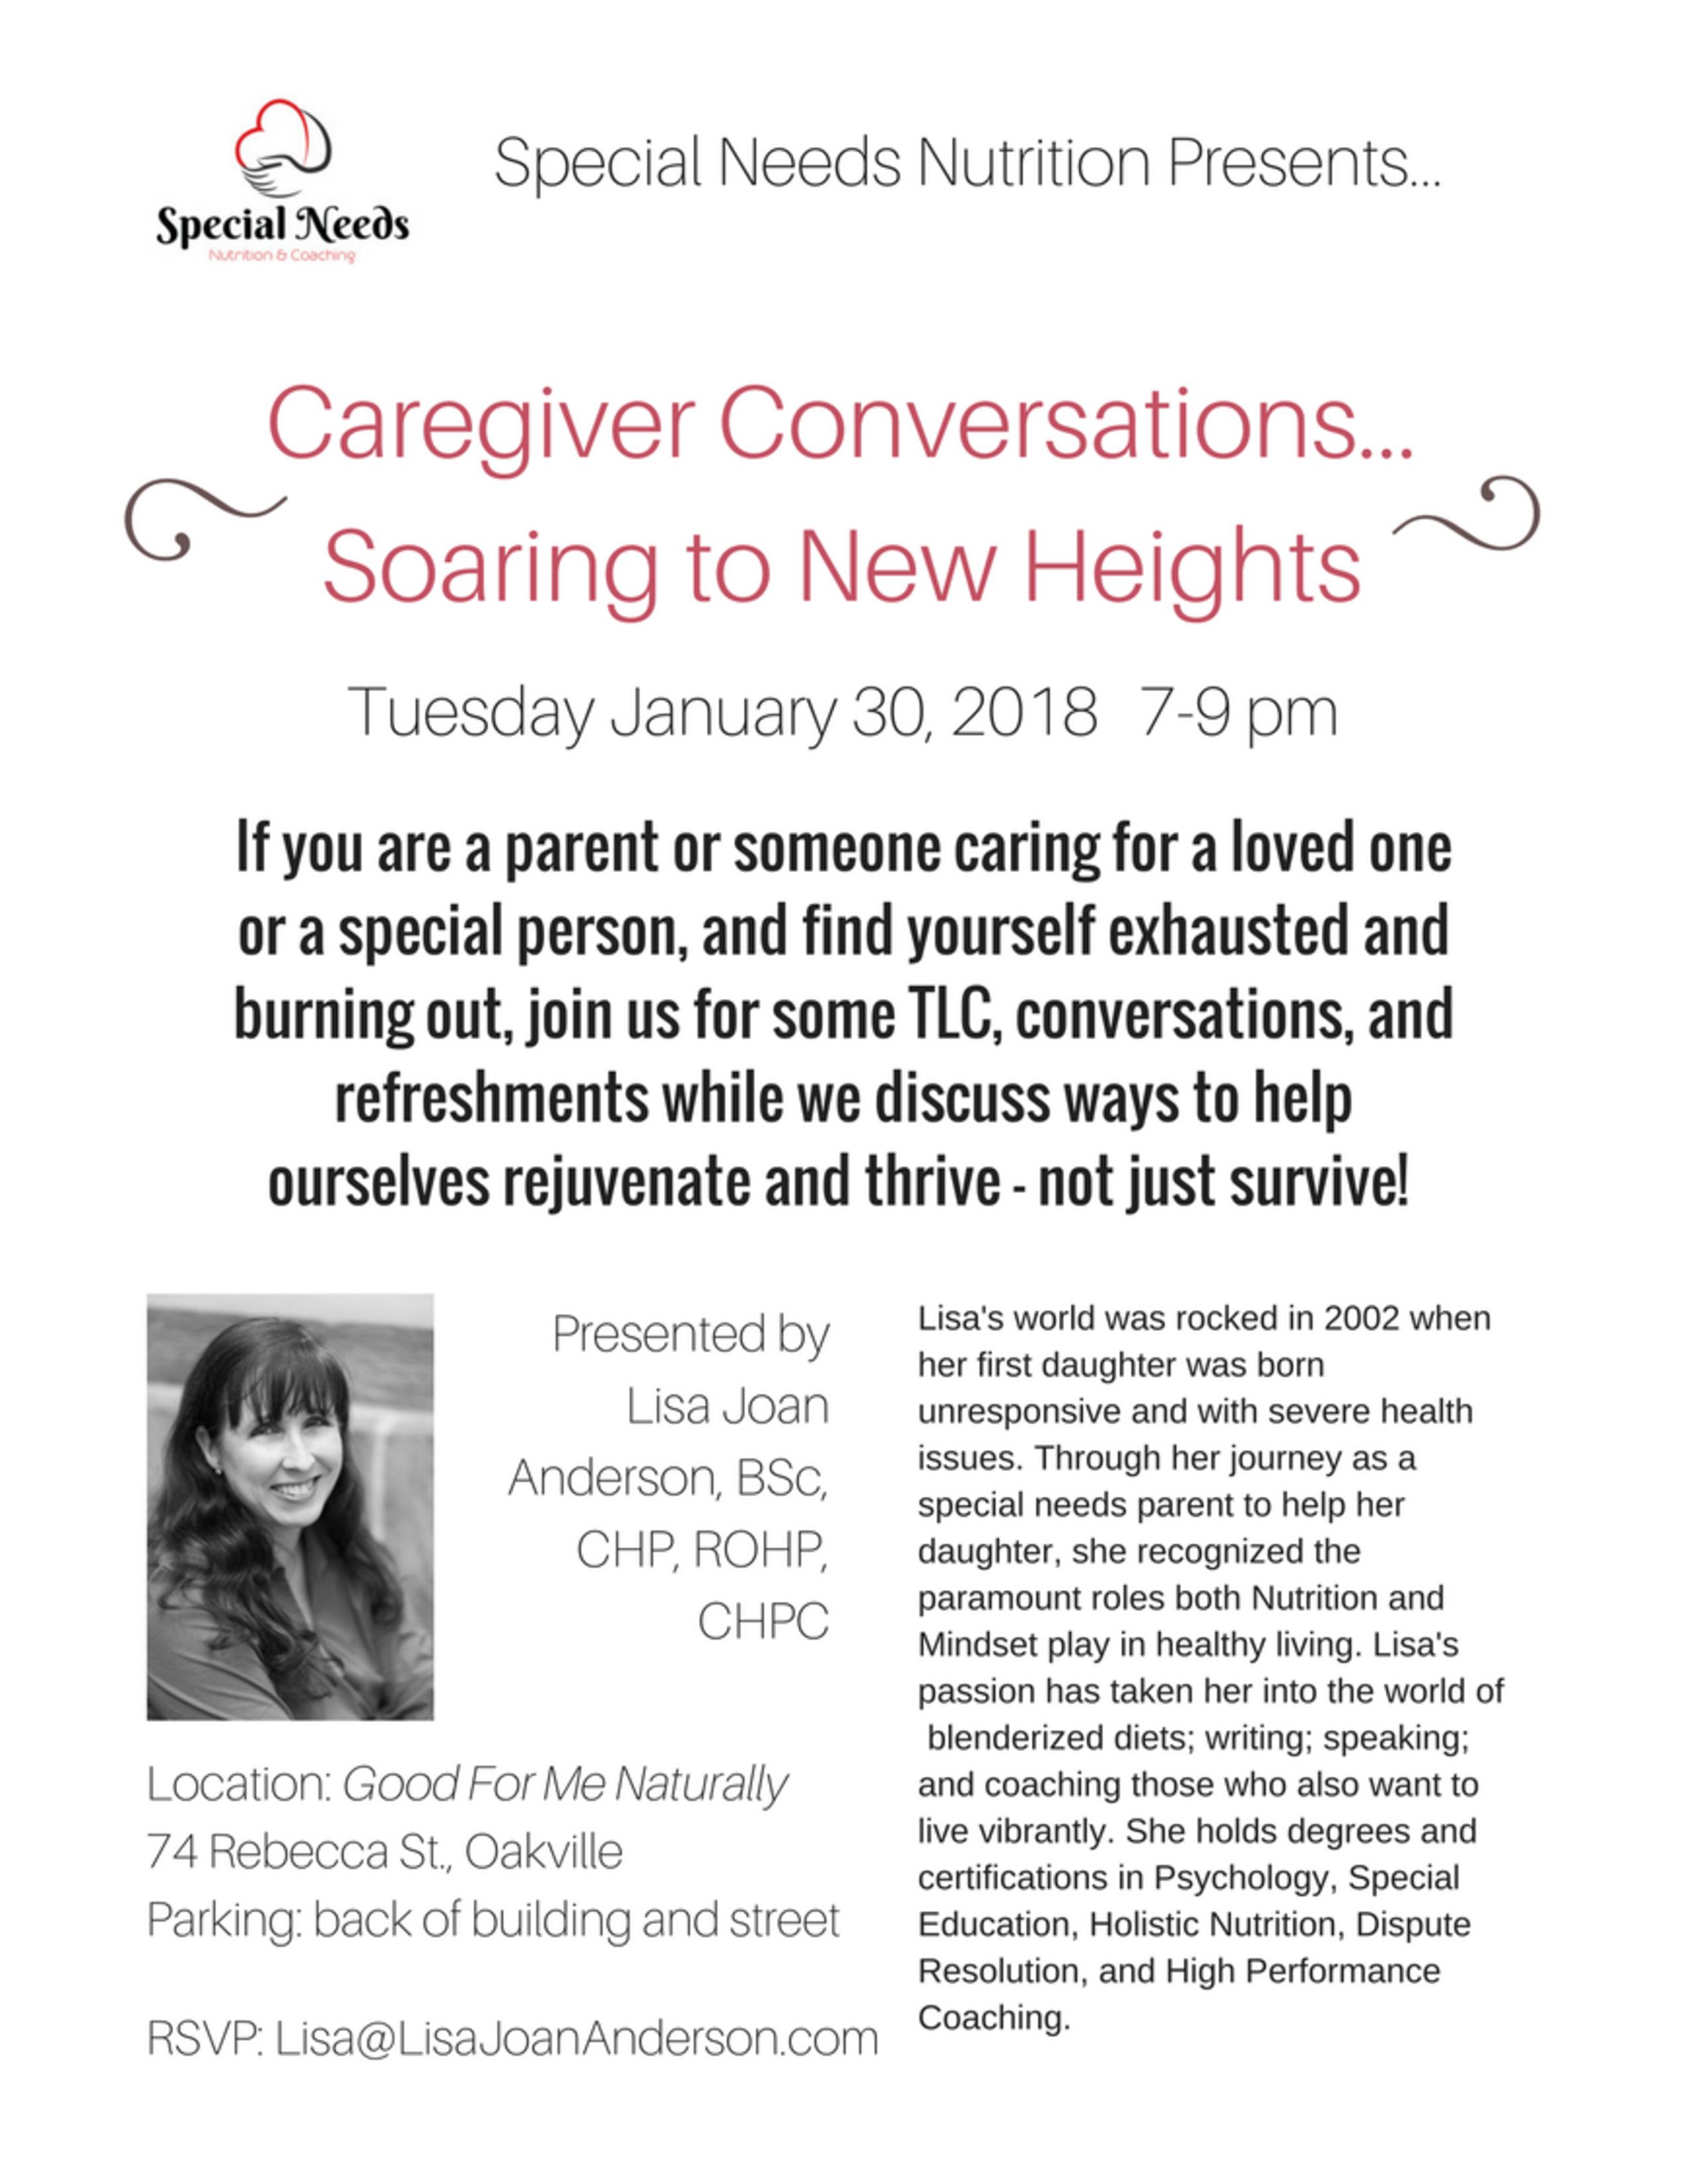 Care for the Caregiver Conversation